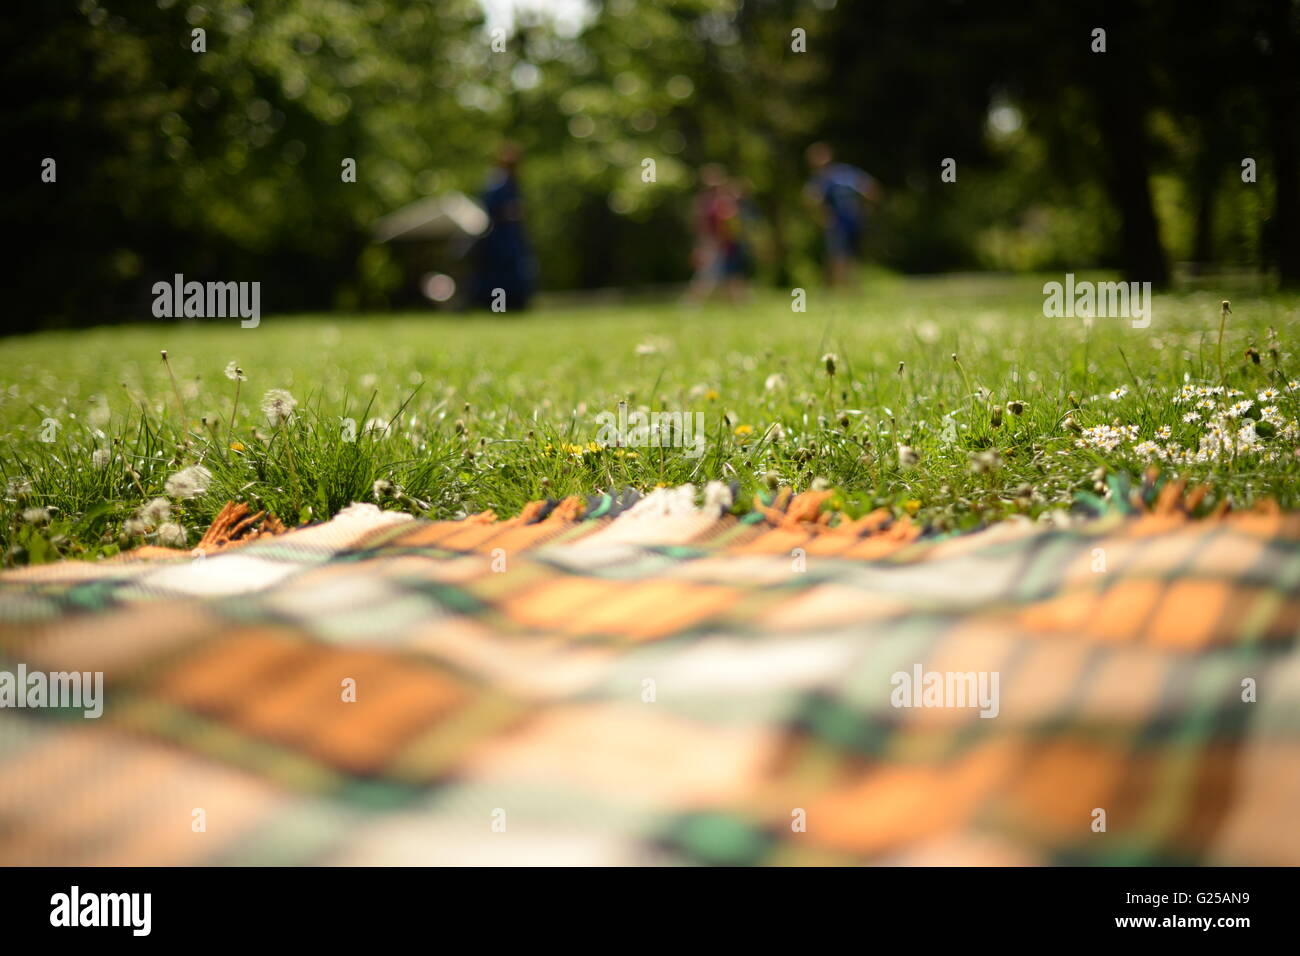 Picnic blanket on grass in park Stock Photo